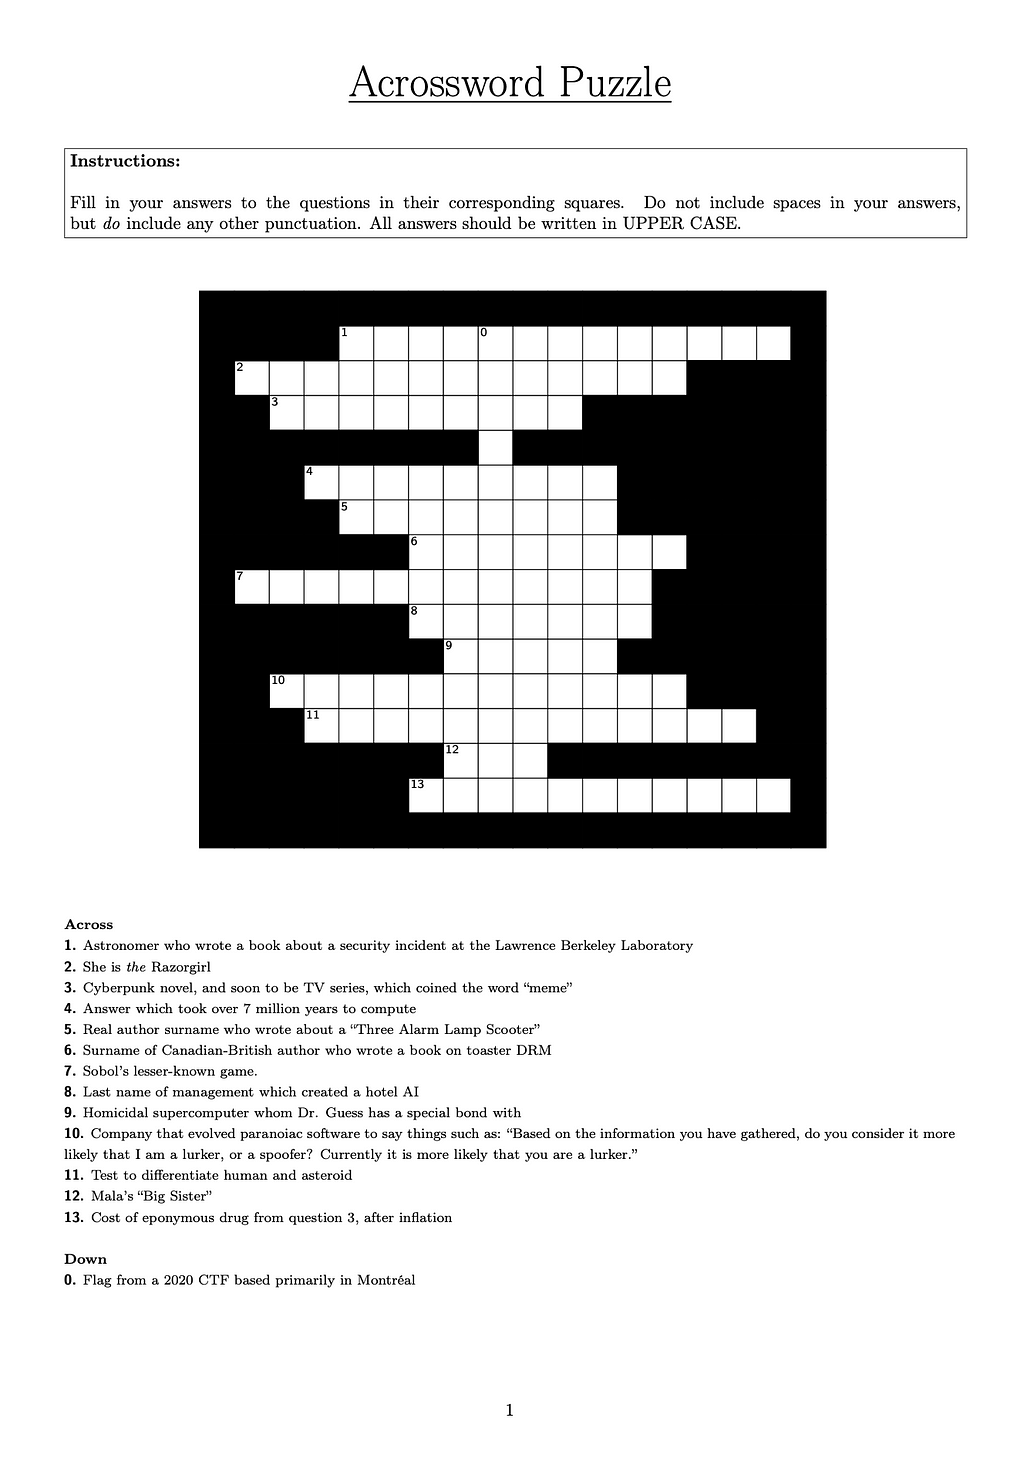 The evil crossword puzzle